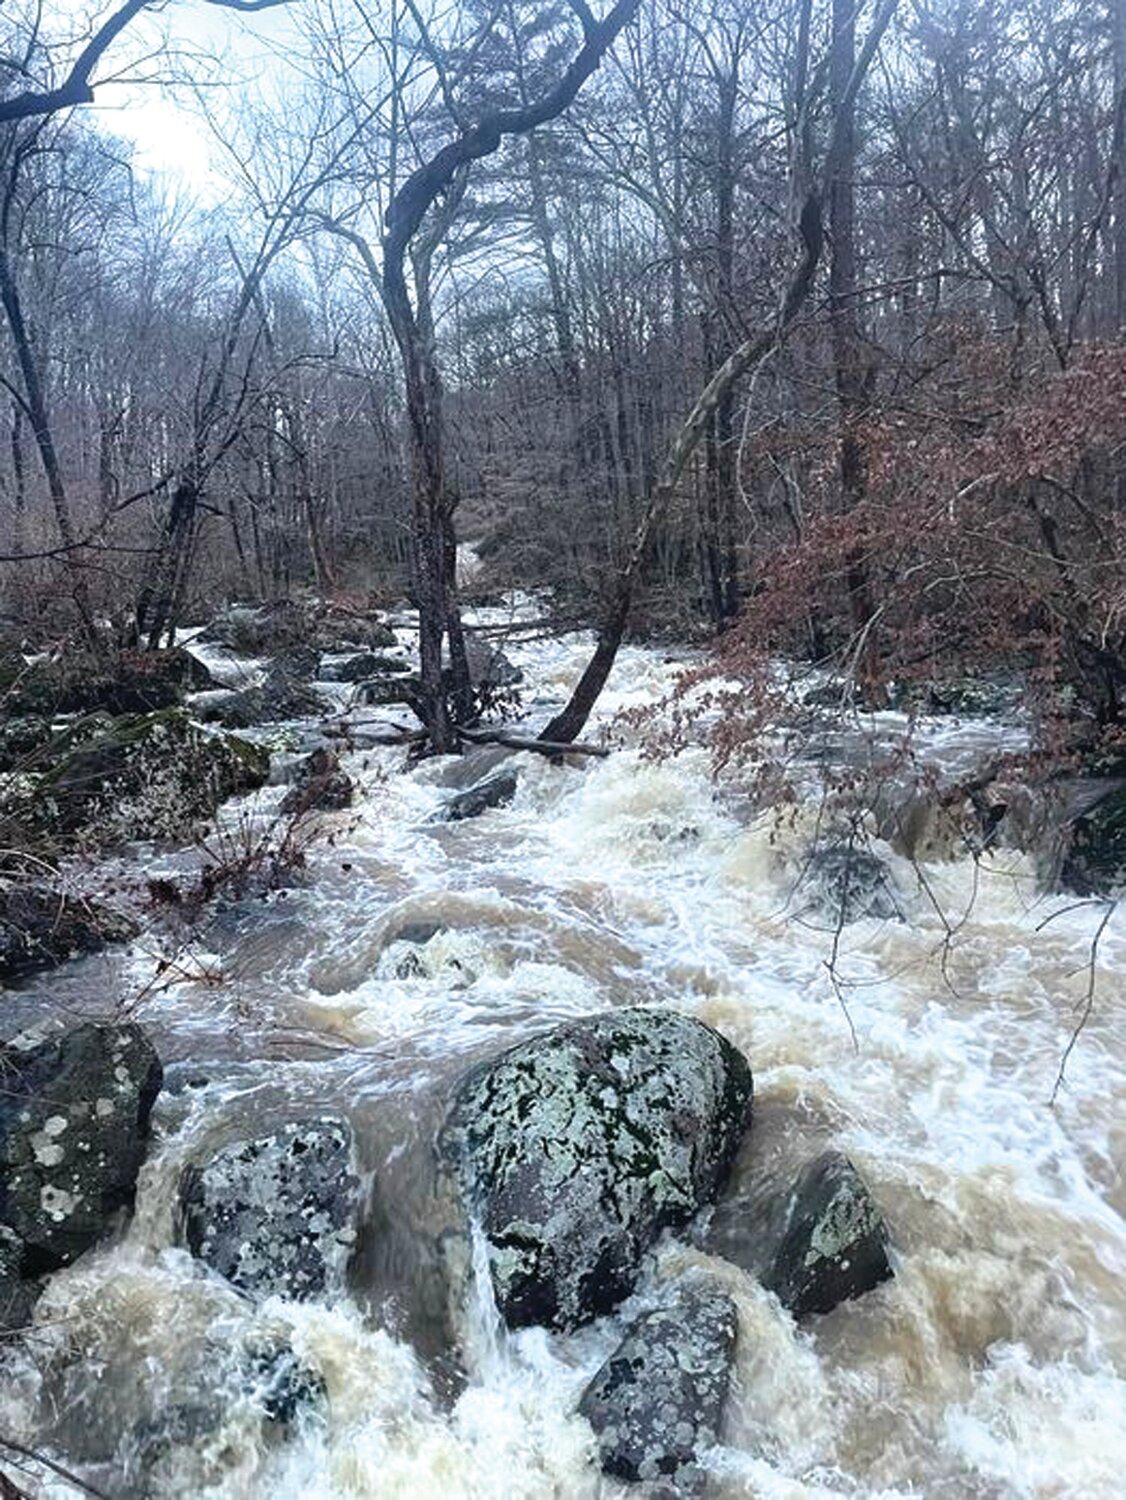 Tuesday’s powerful storm flooded Beaver Run Creek in Ottsville.